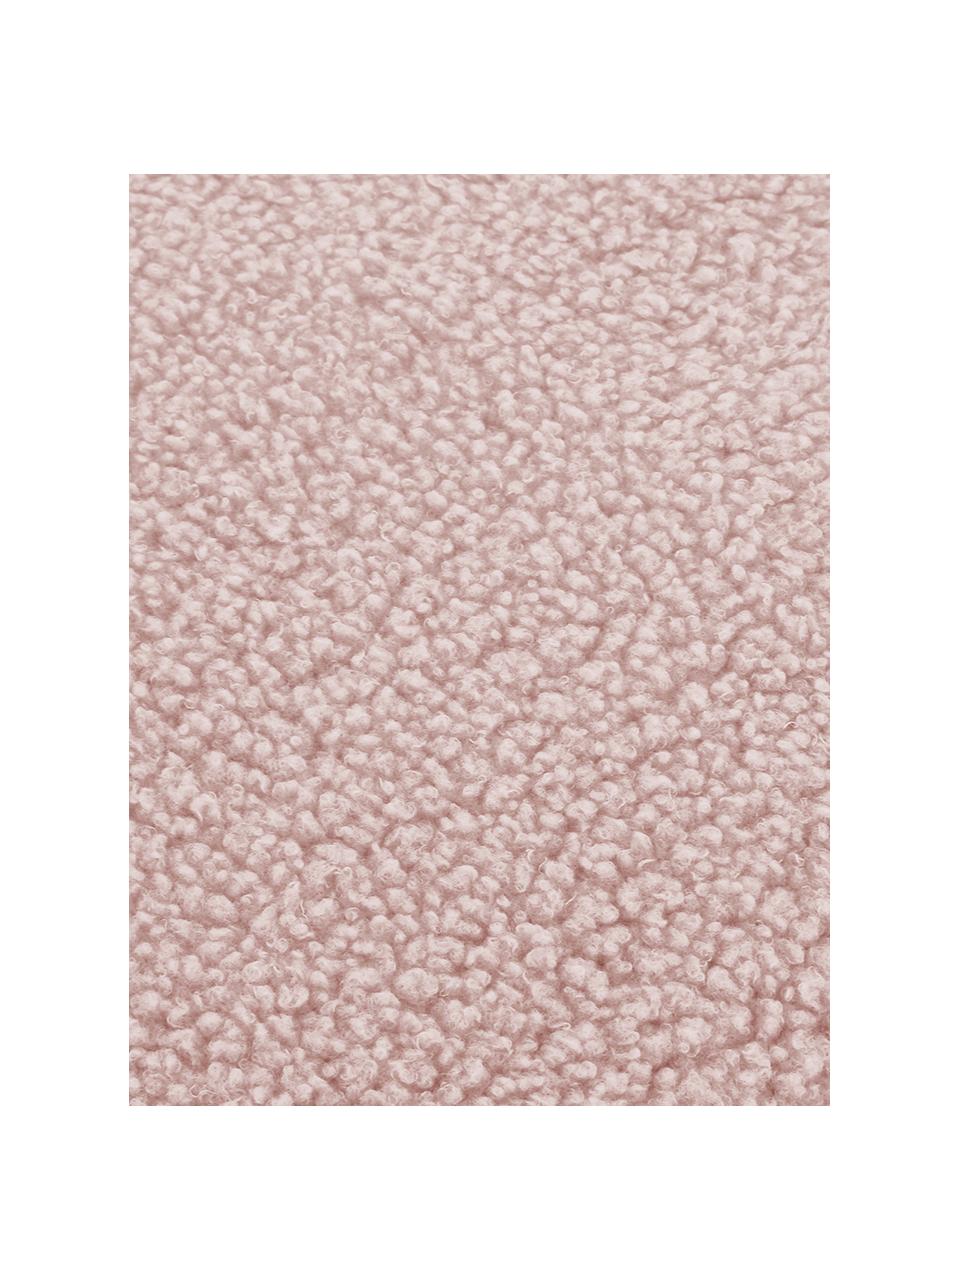 Federa arredo in teddy rosa Mille, Retro: 100% poliestere (teddy), Rosa, Larg. 30 x Lung. 50 cm